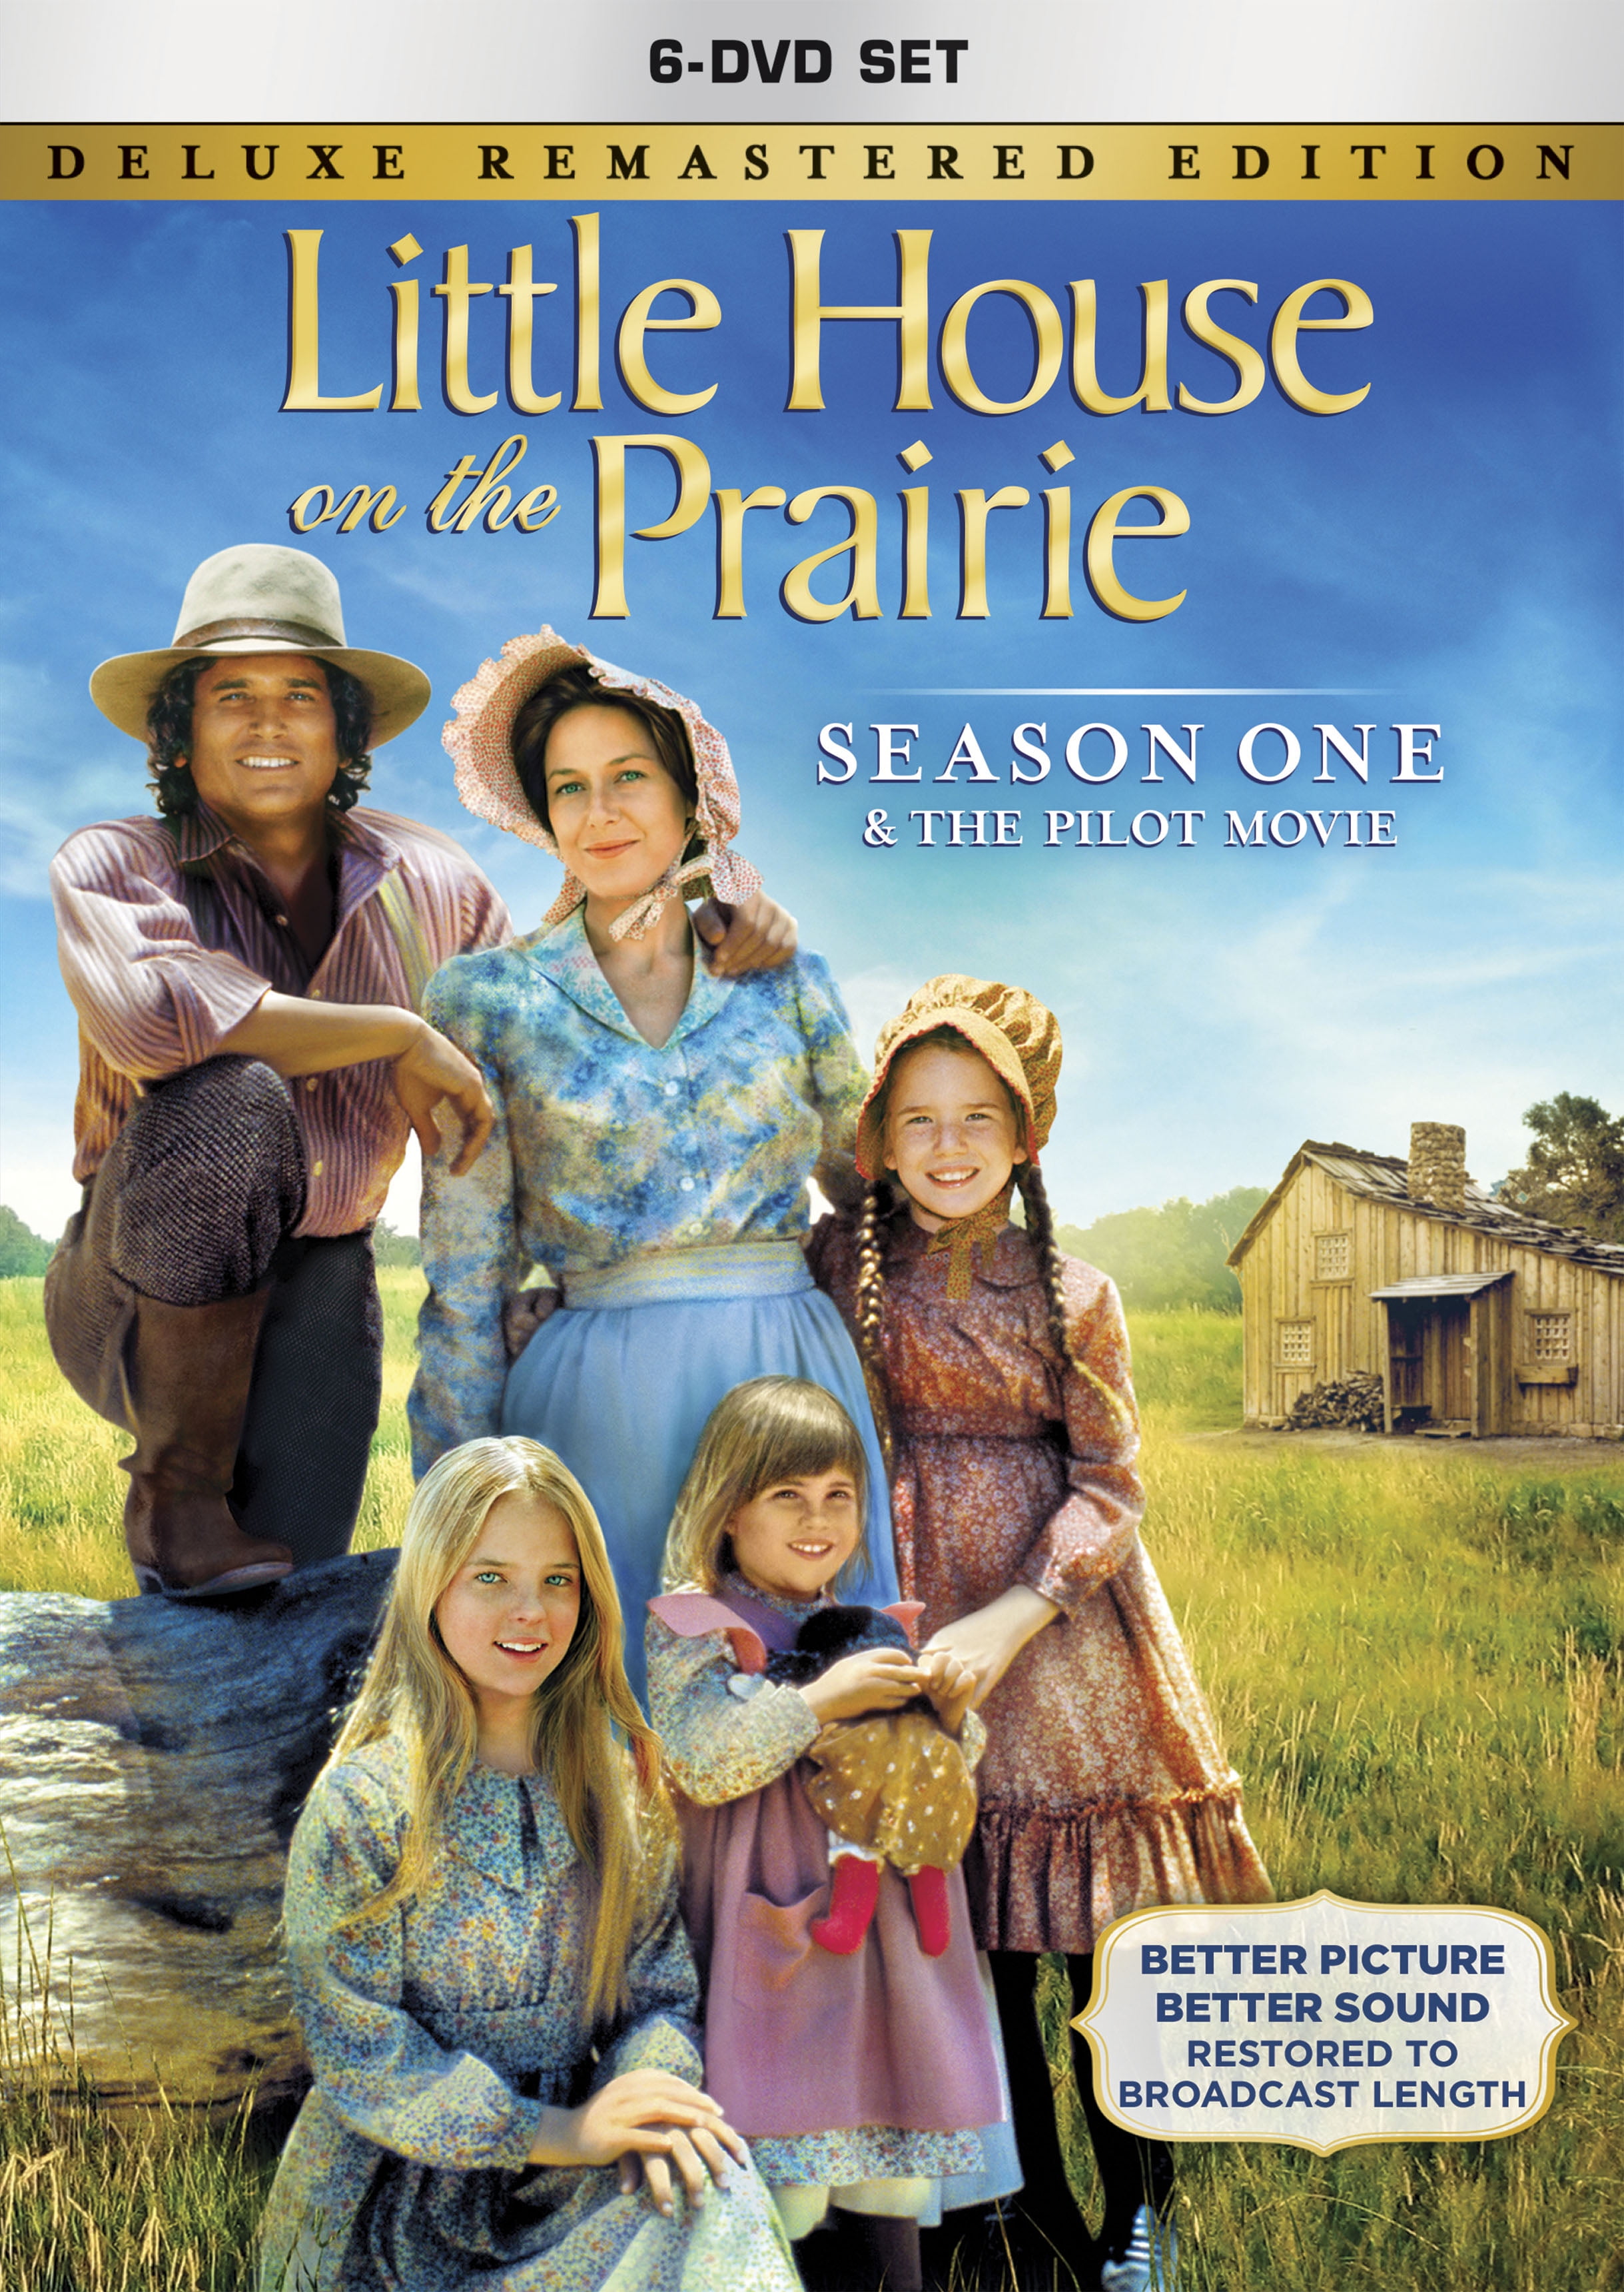 Little lore. Little House on the Prairie 1974.